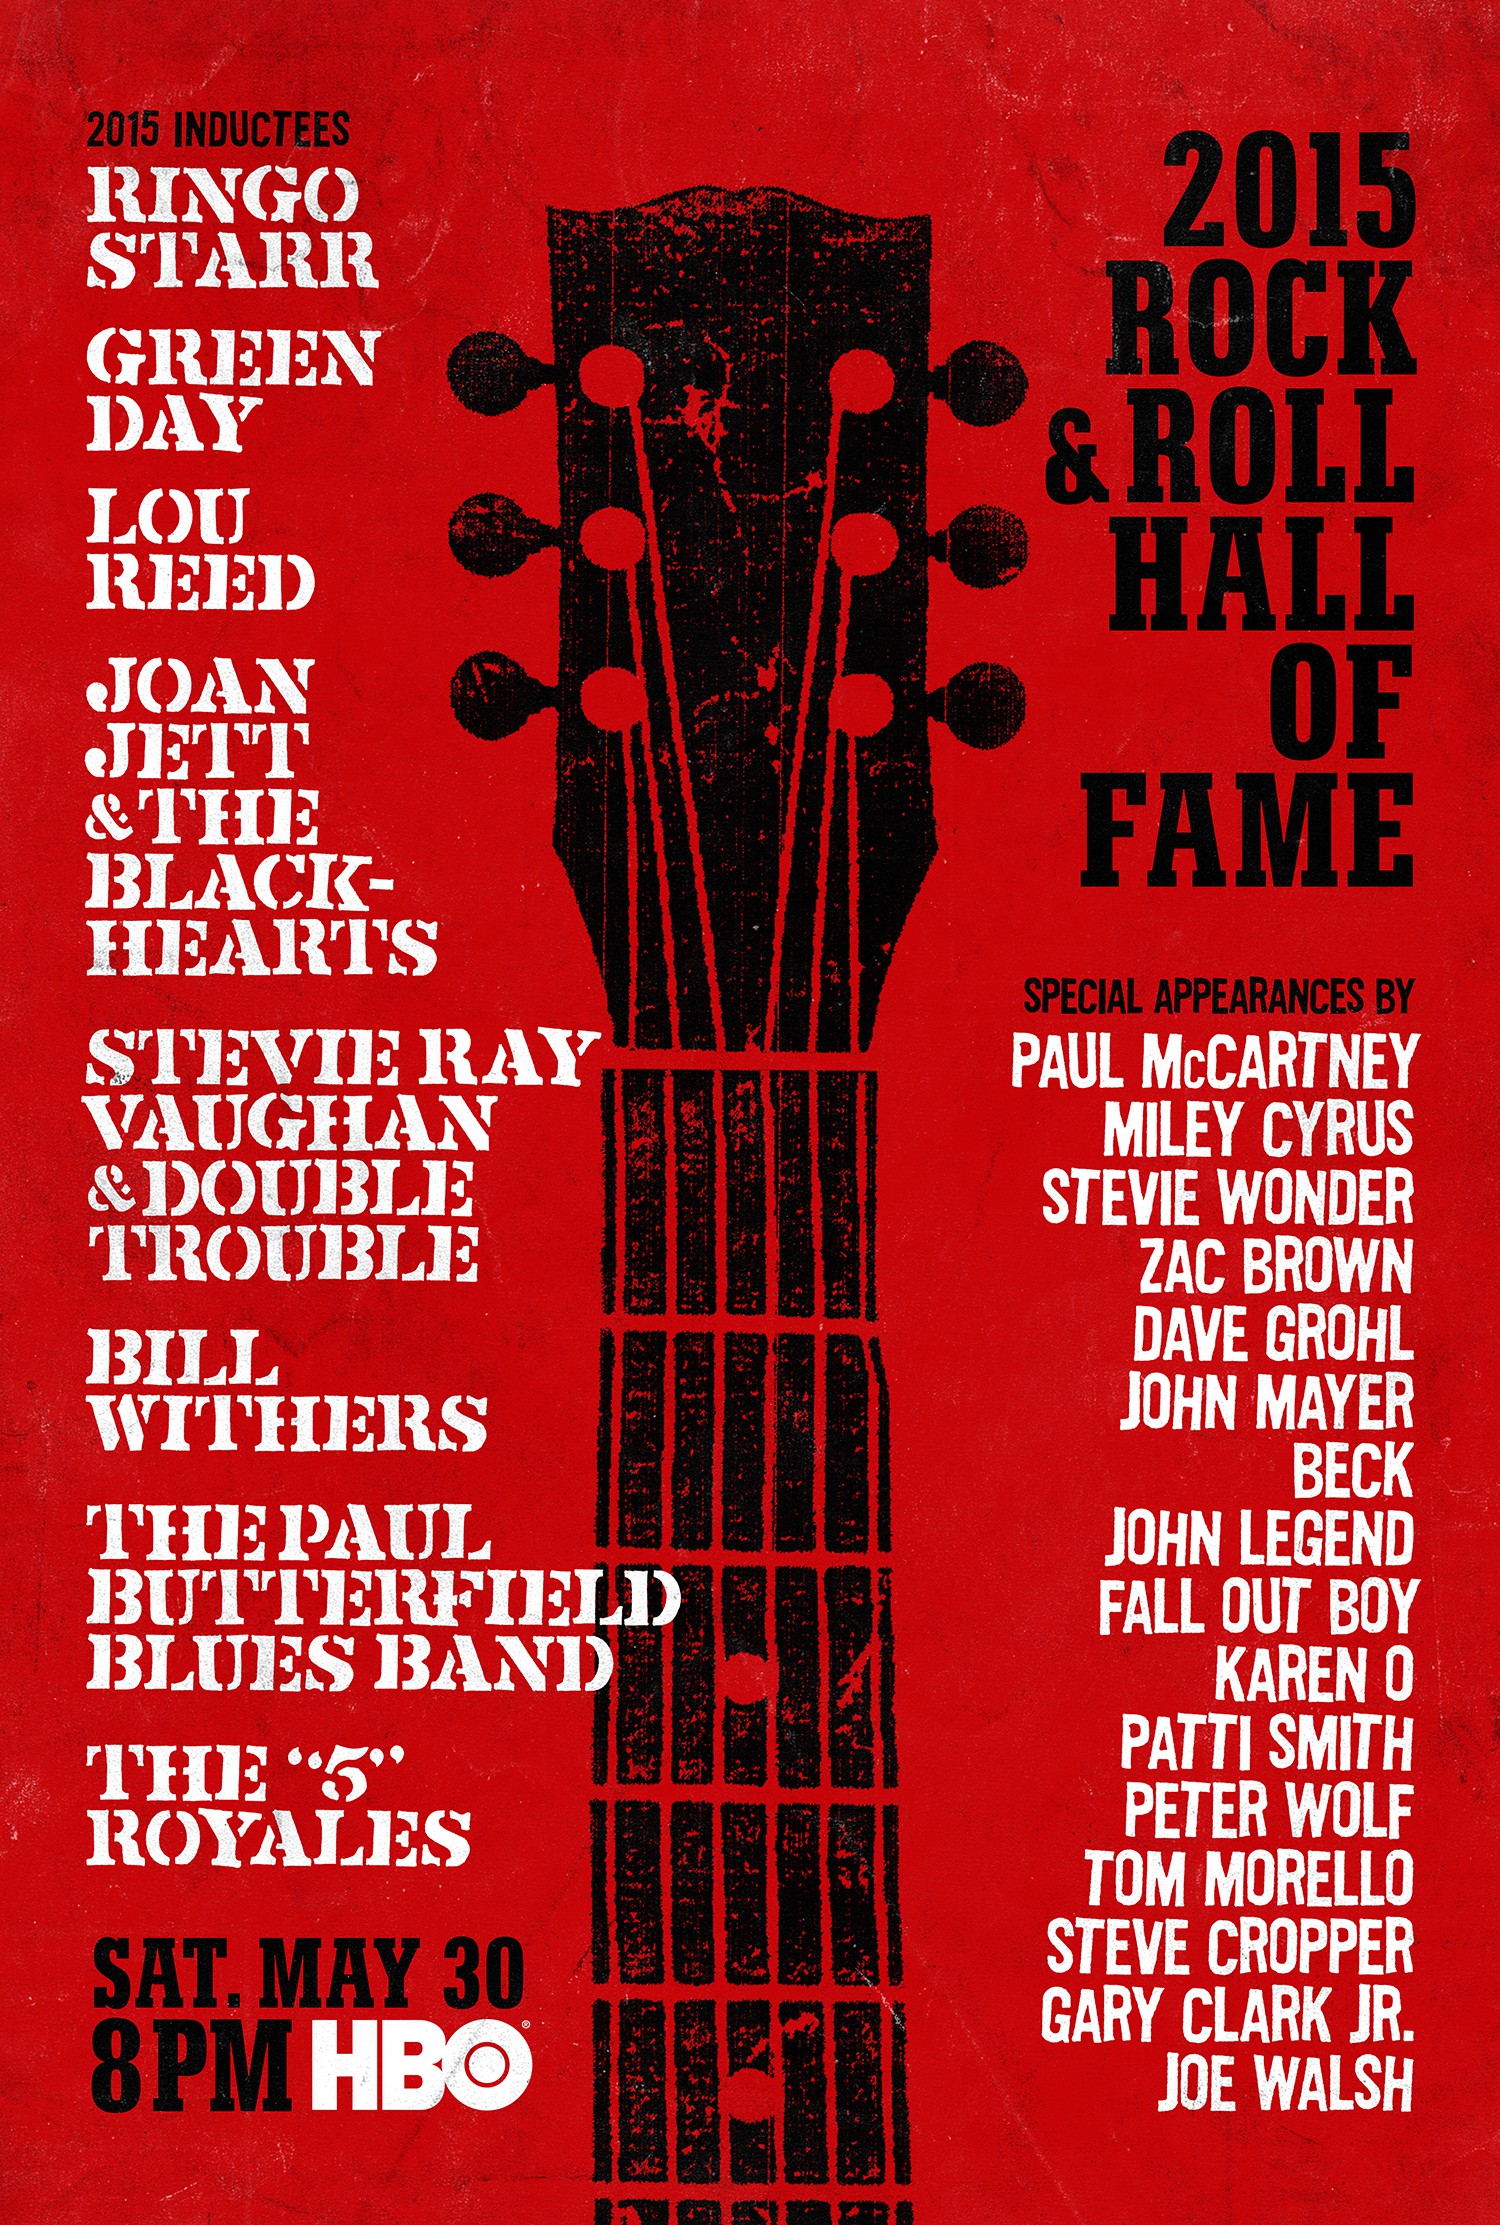 Mega Sized TV Poster Image for 2015 Rock & Roll Hall of Fame 